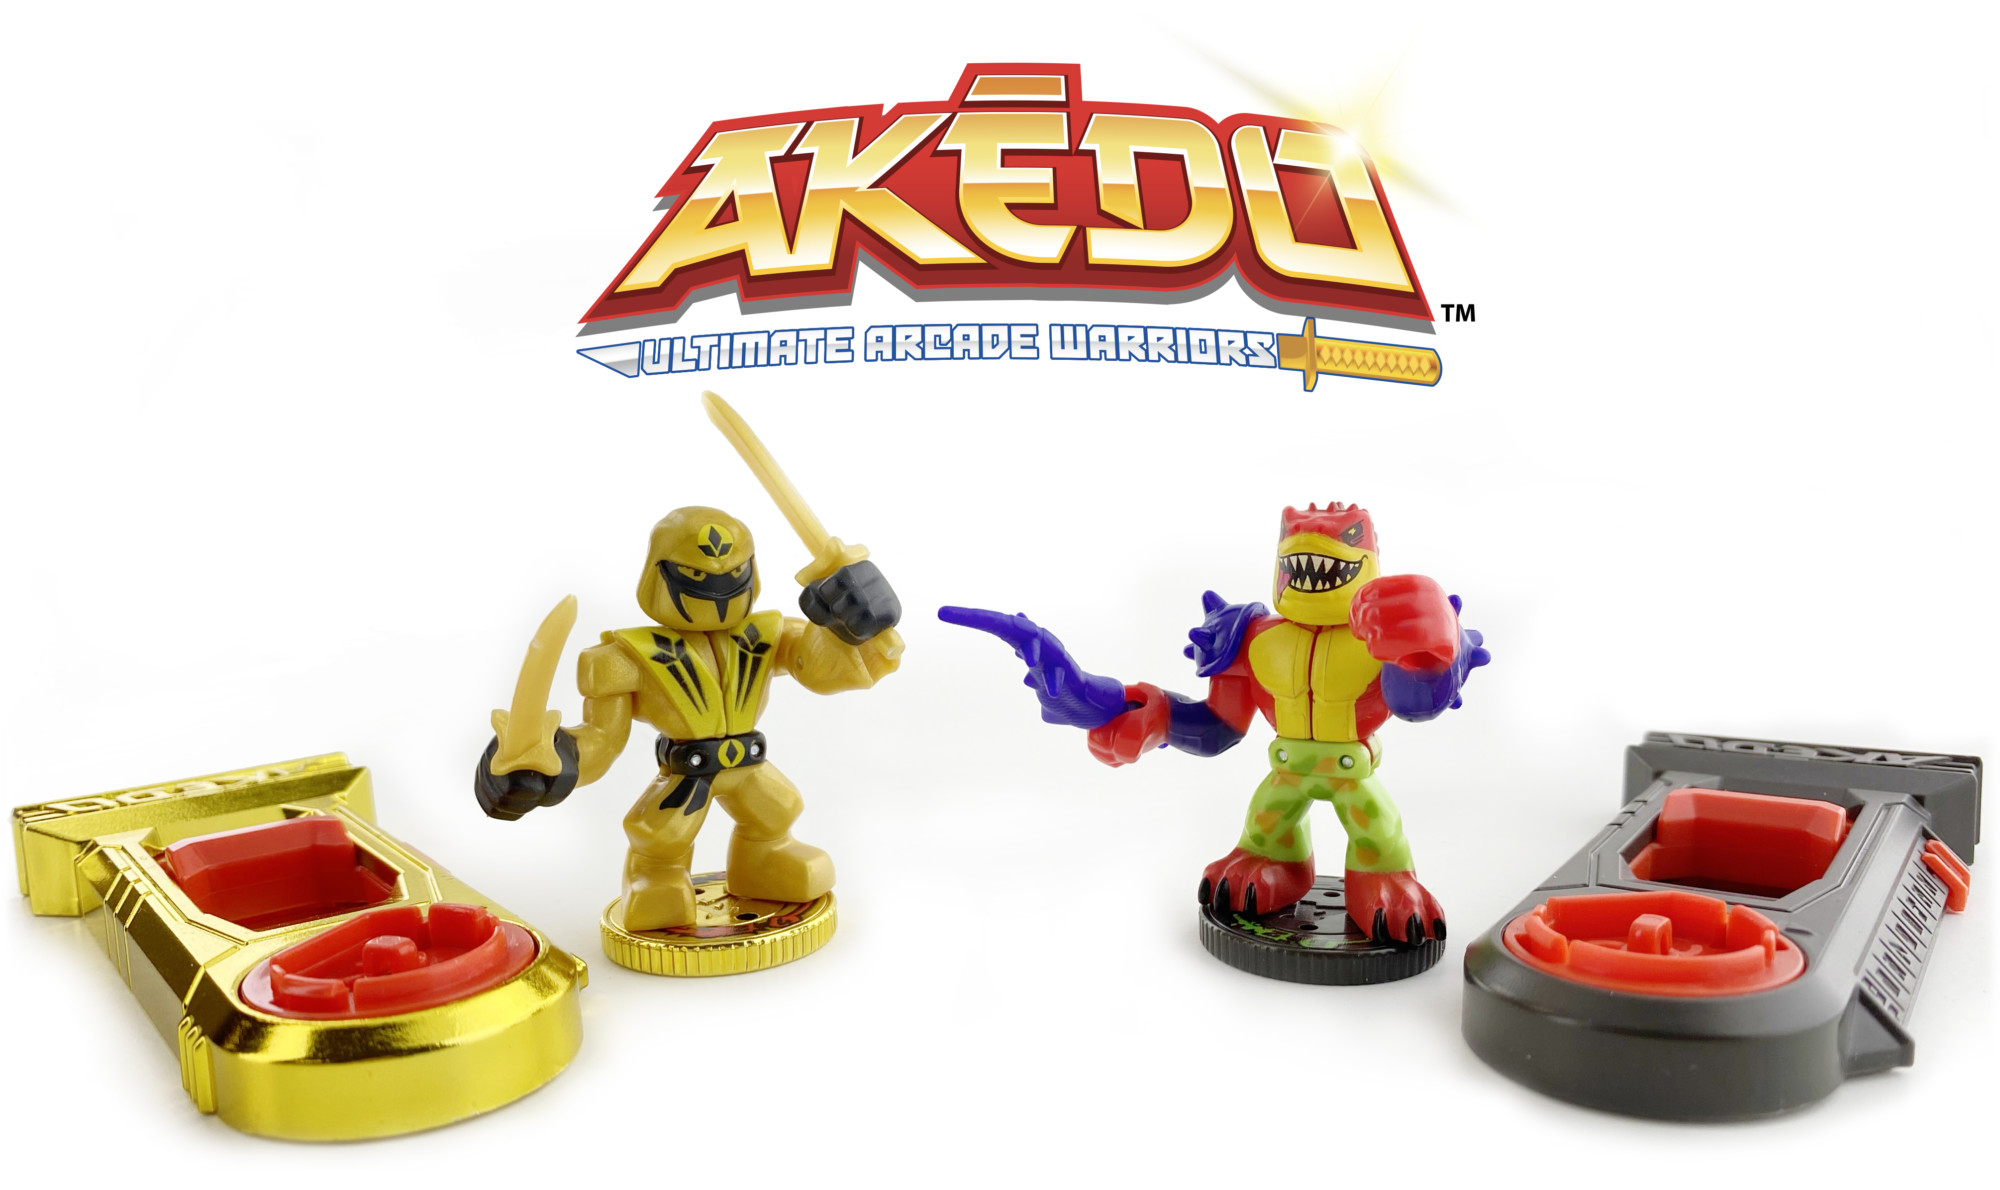 Nickelodeon tournament marks launch of Akedo Ultimate Arcade Warriors -Toy  World Magazine